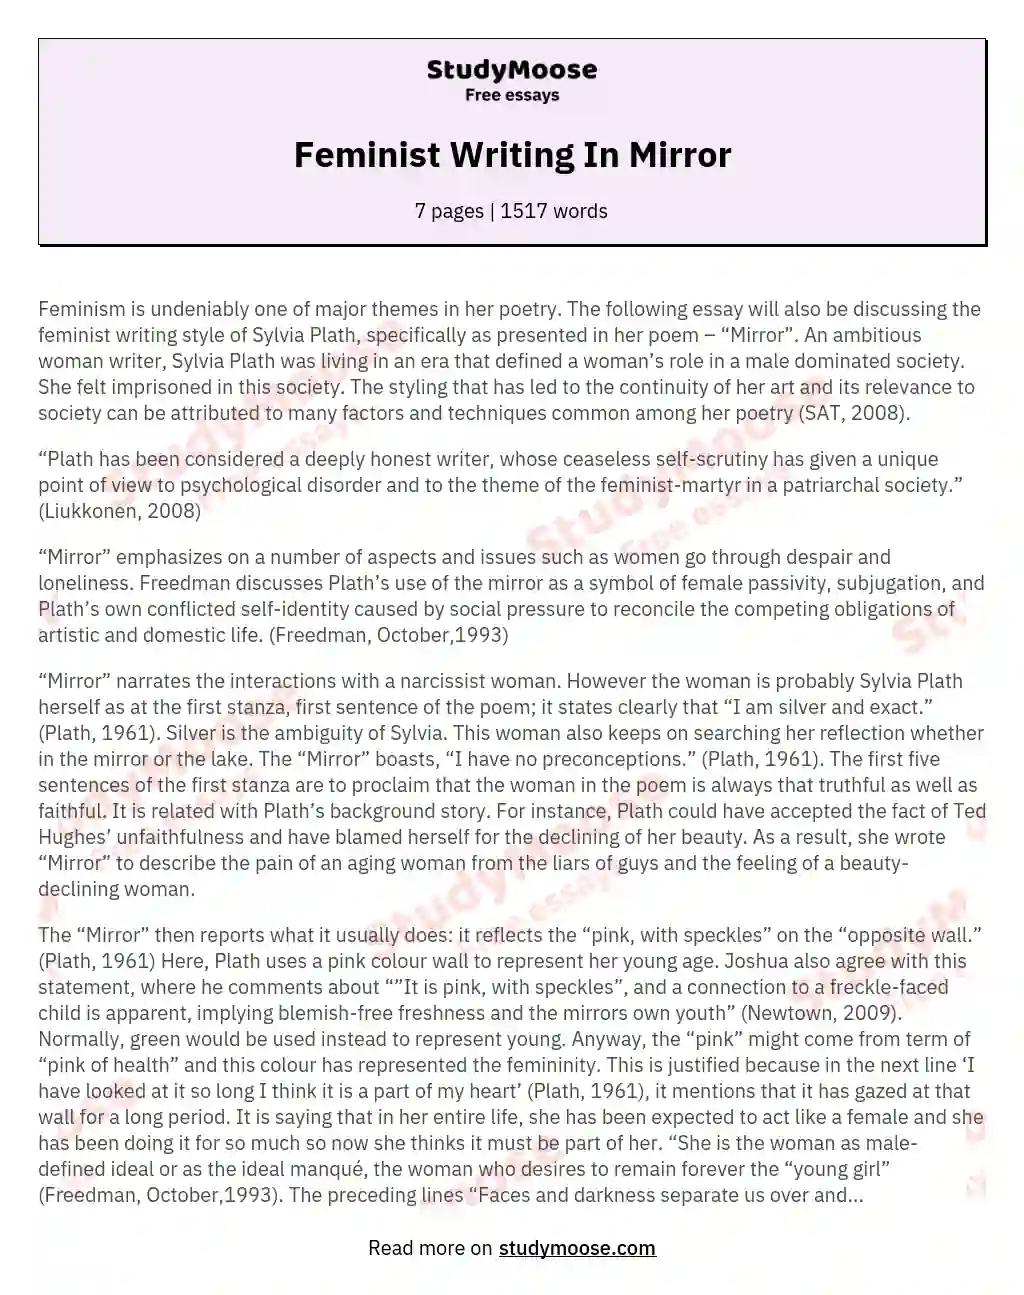 Feminist Writing In Mirror essay